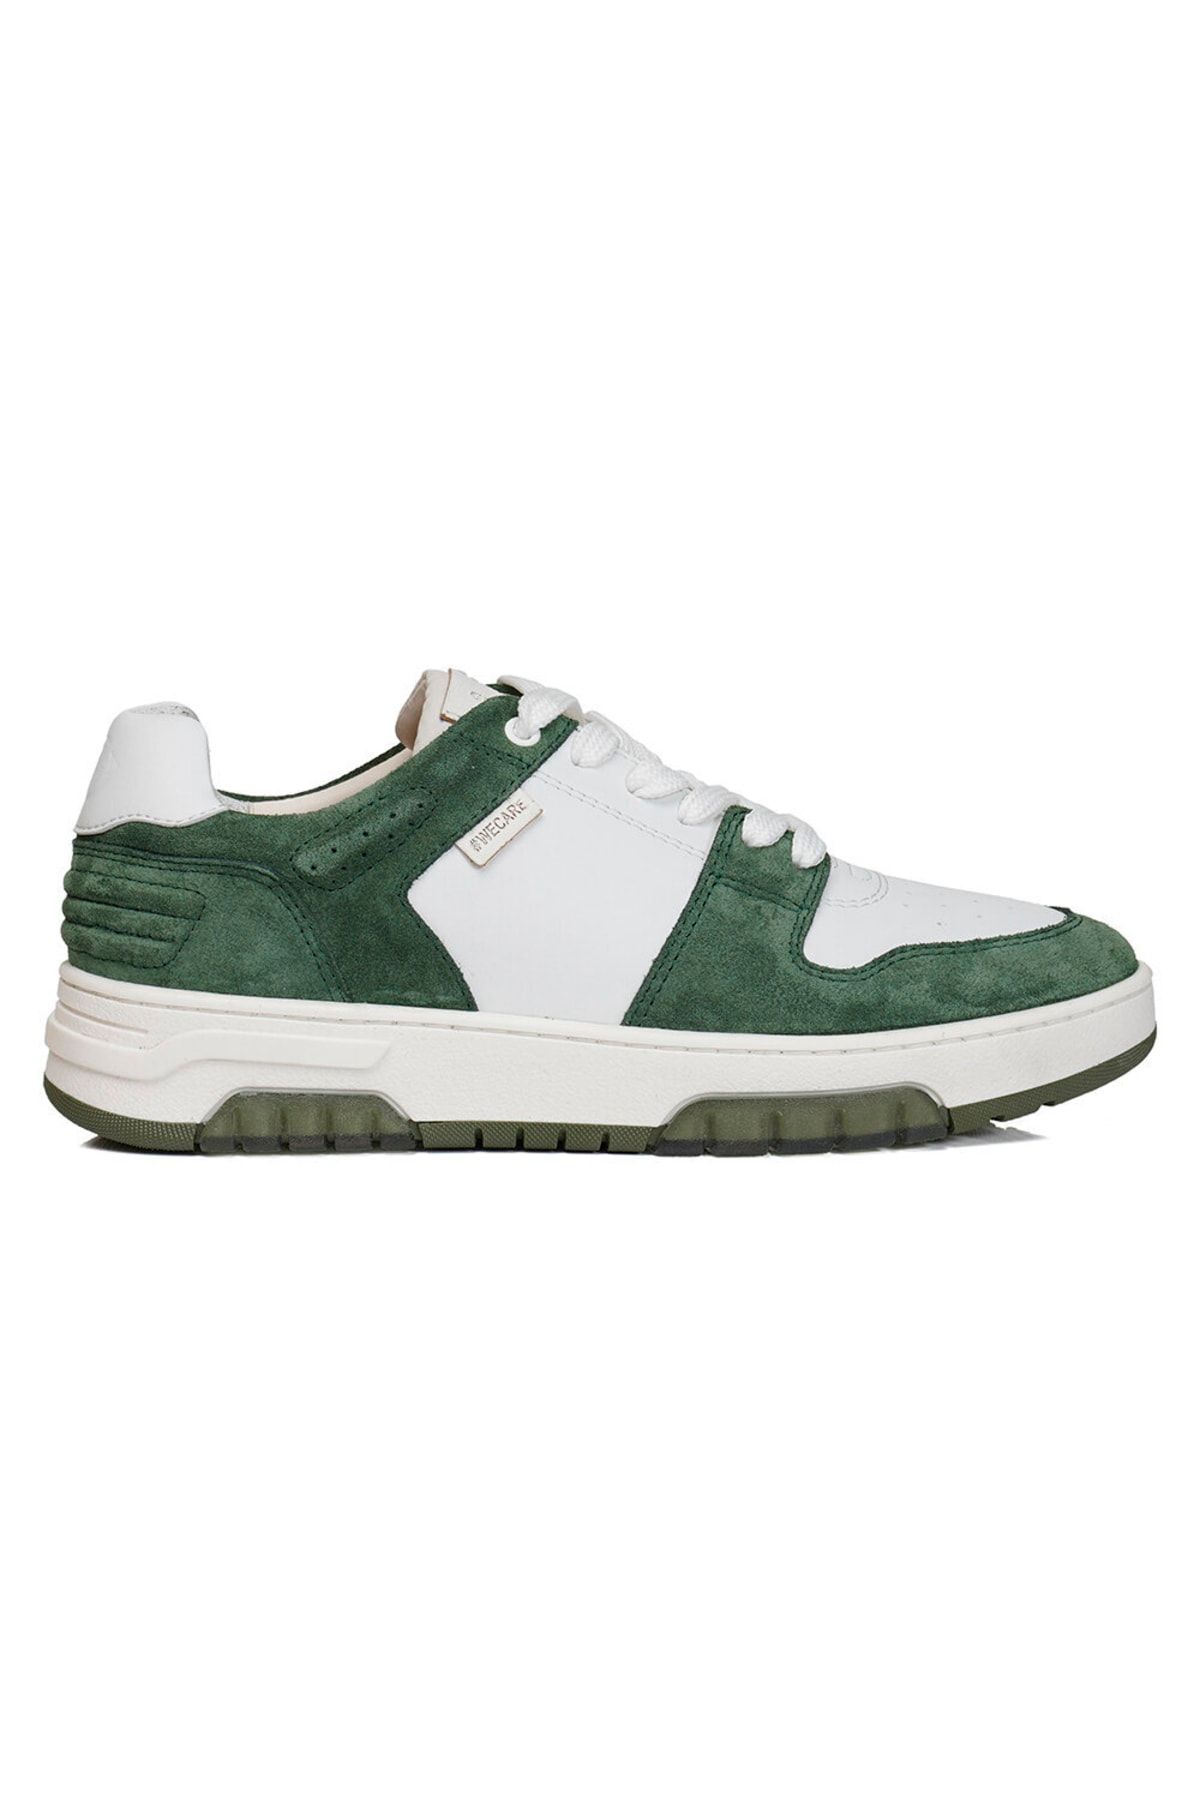 Greyder Lab Kadın Yeşil Sneaker Ayakkabı 3y2sa45090